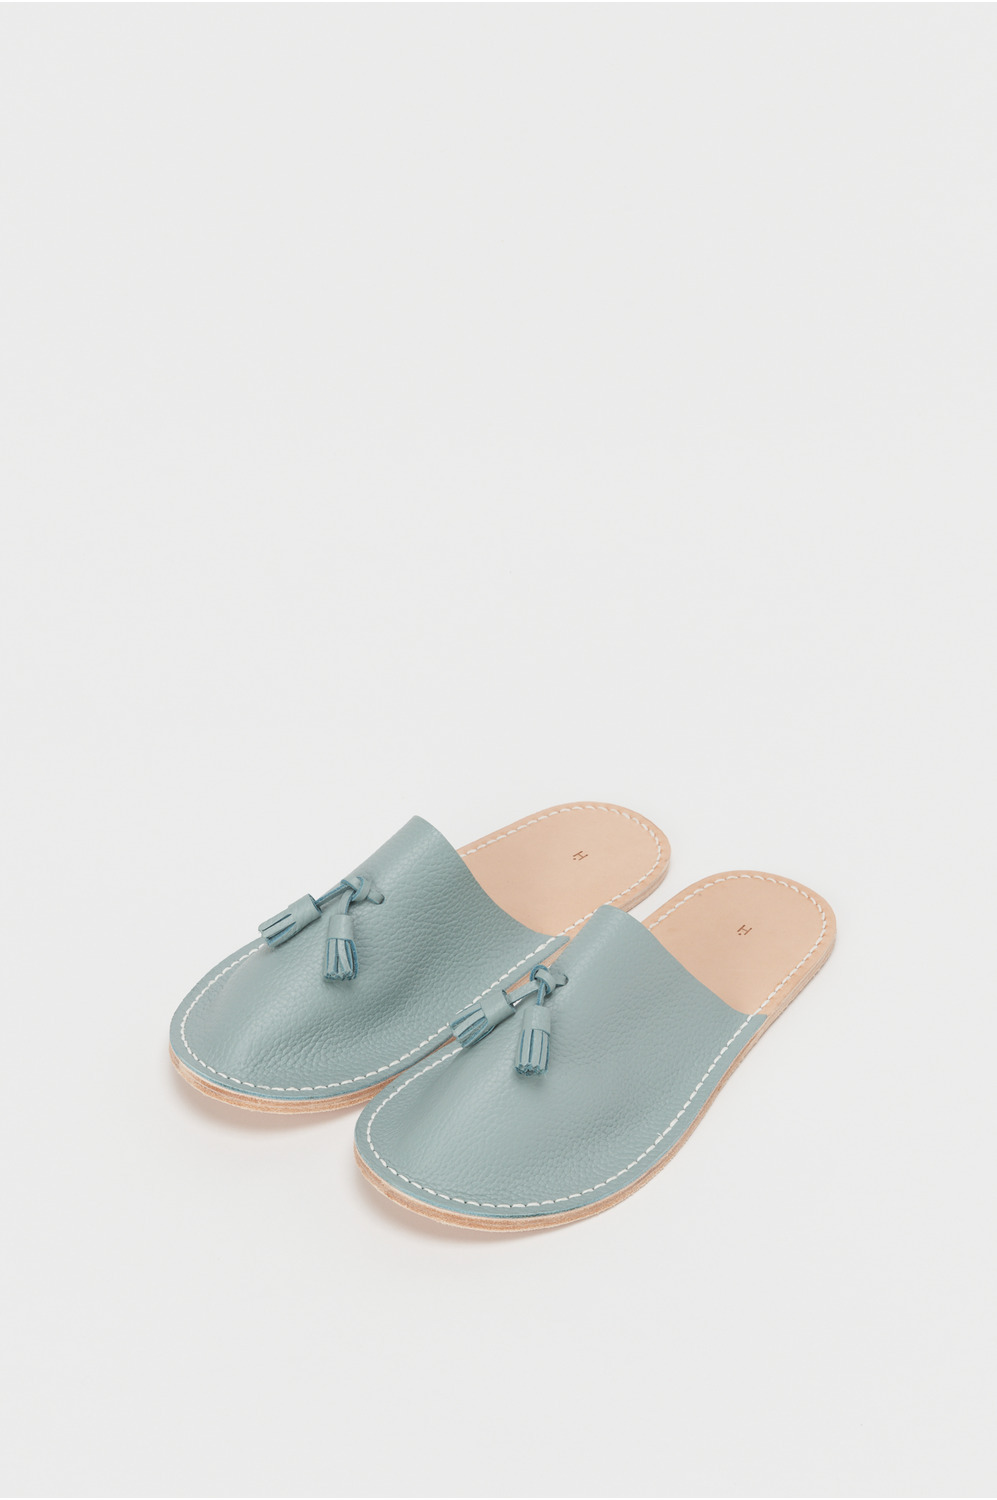 leather slipper 詳細画像 blue gray 1